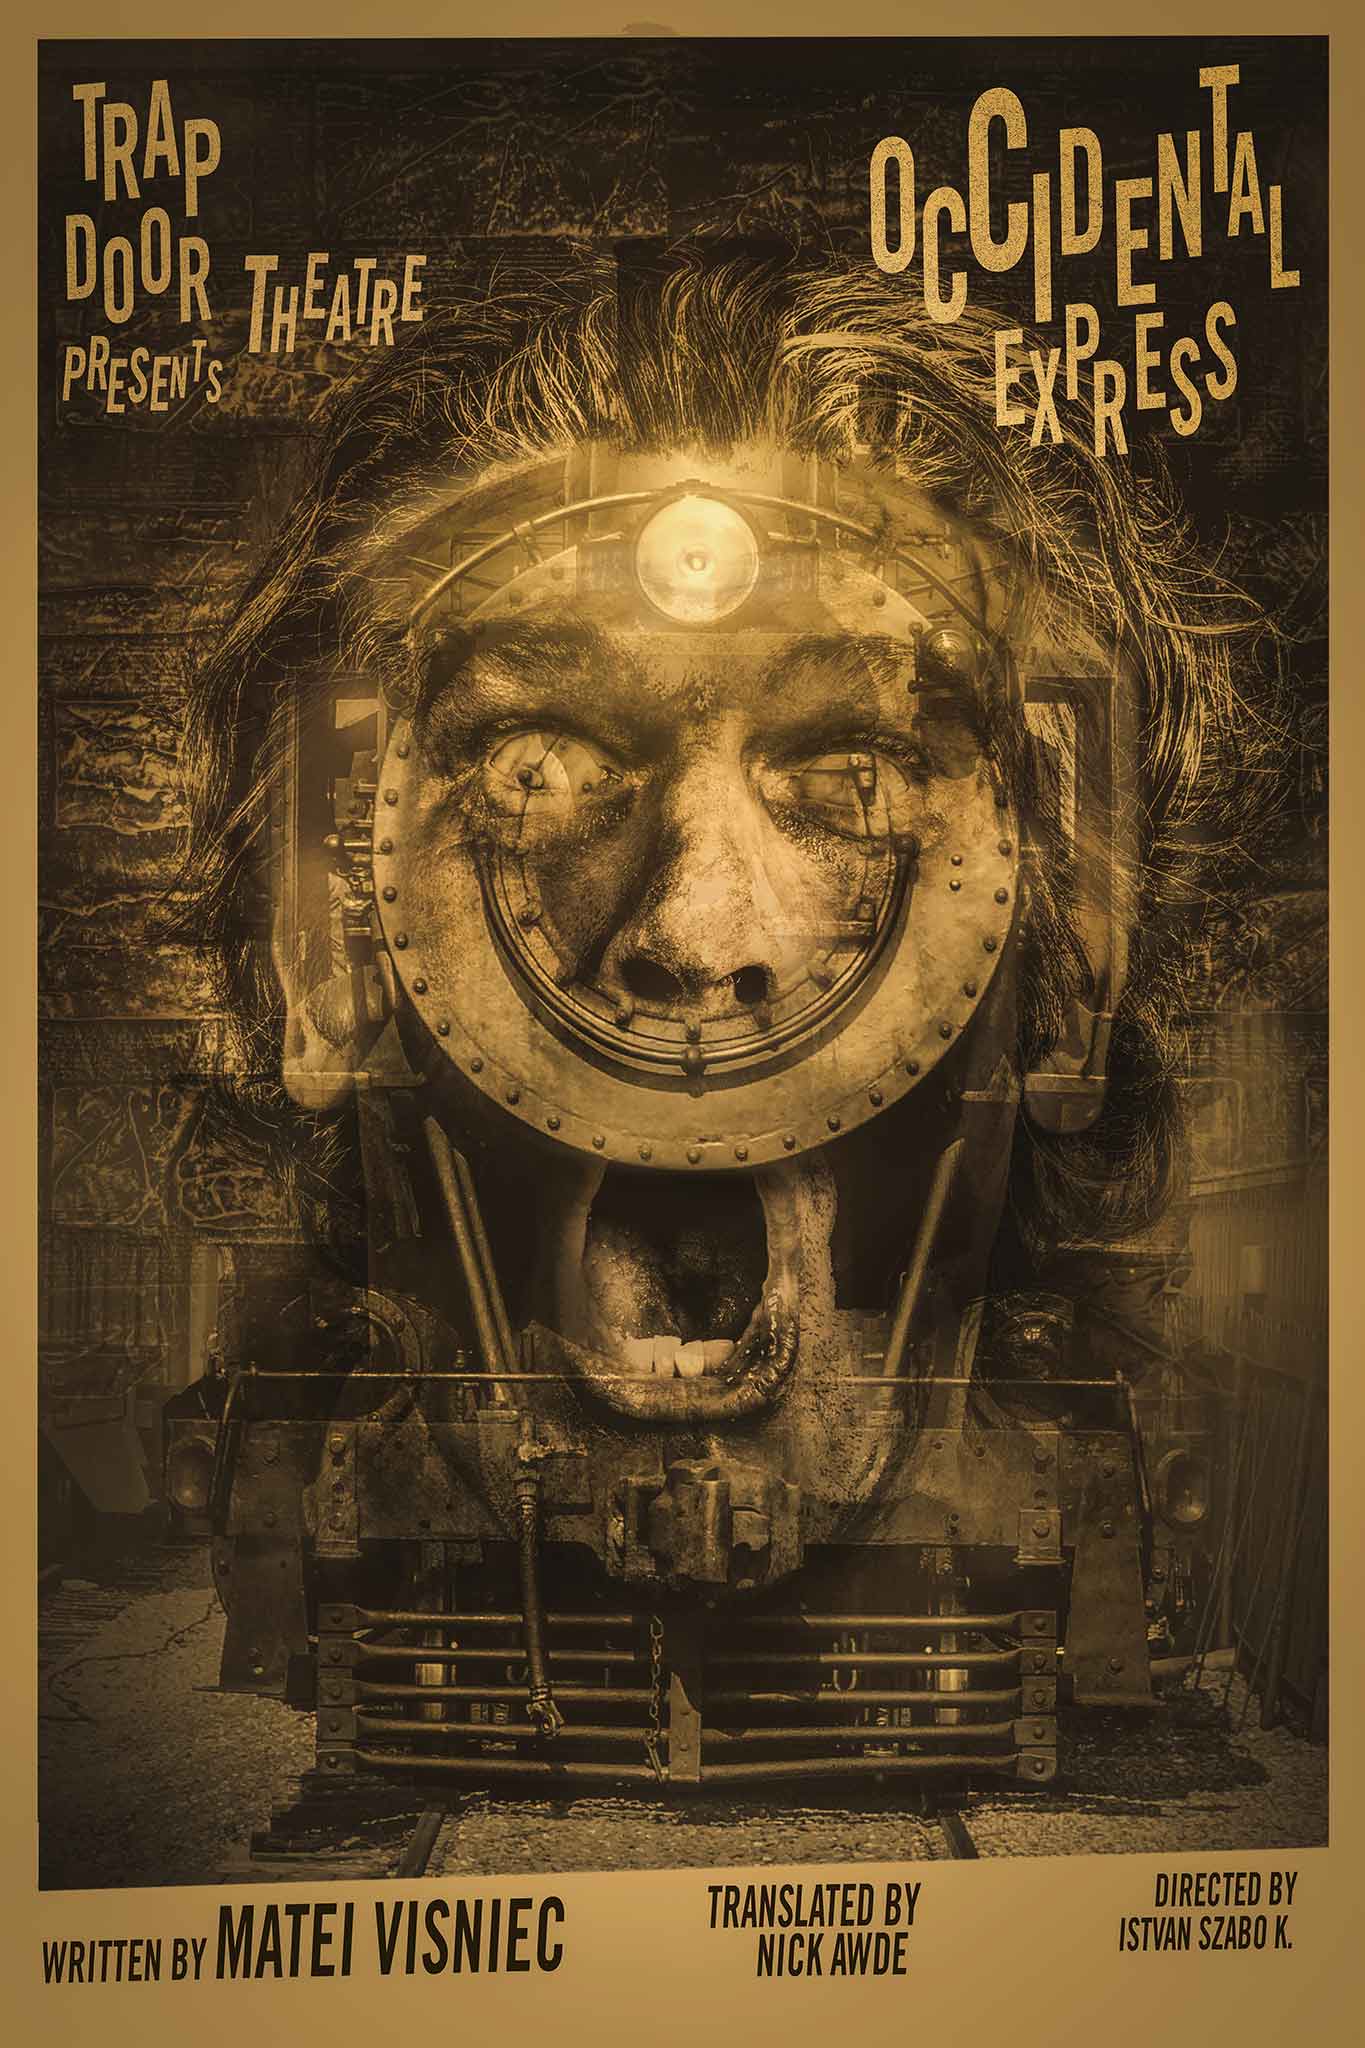 Trap Door Theatre Occidental Express Poster